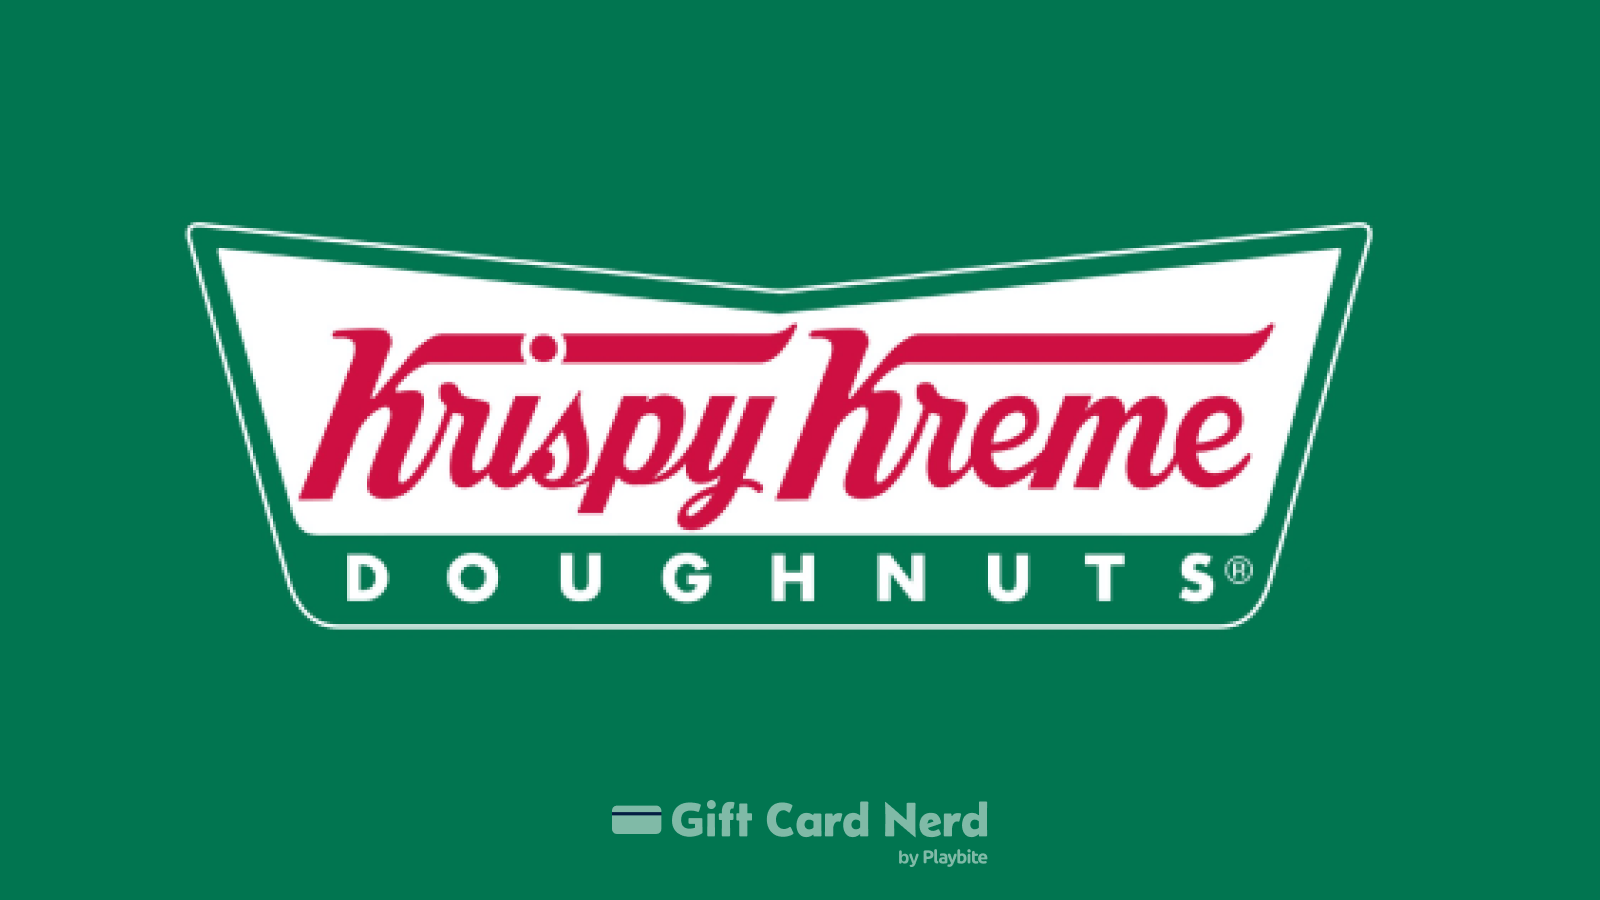 Can I Use a Krispy Kreme Gift Card on PayPal?